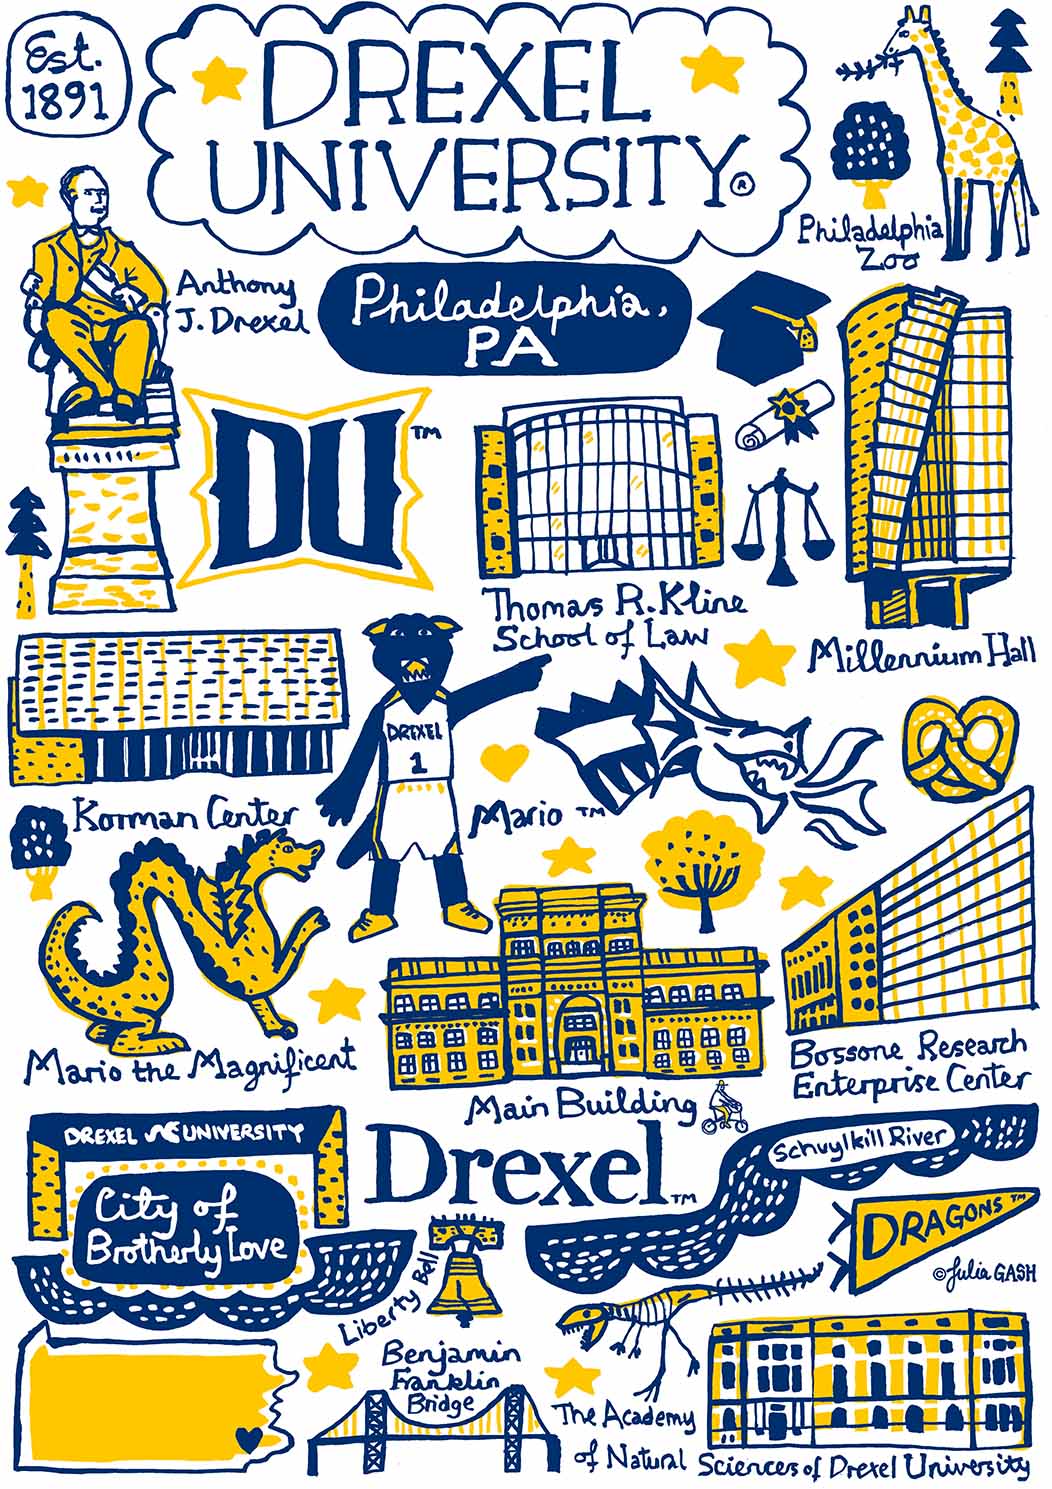 Drexel University Design by Julia Gash